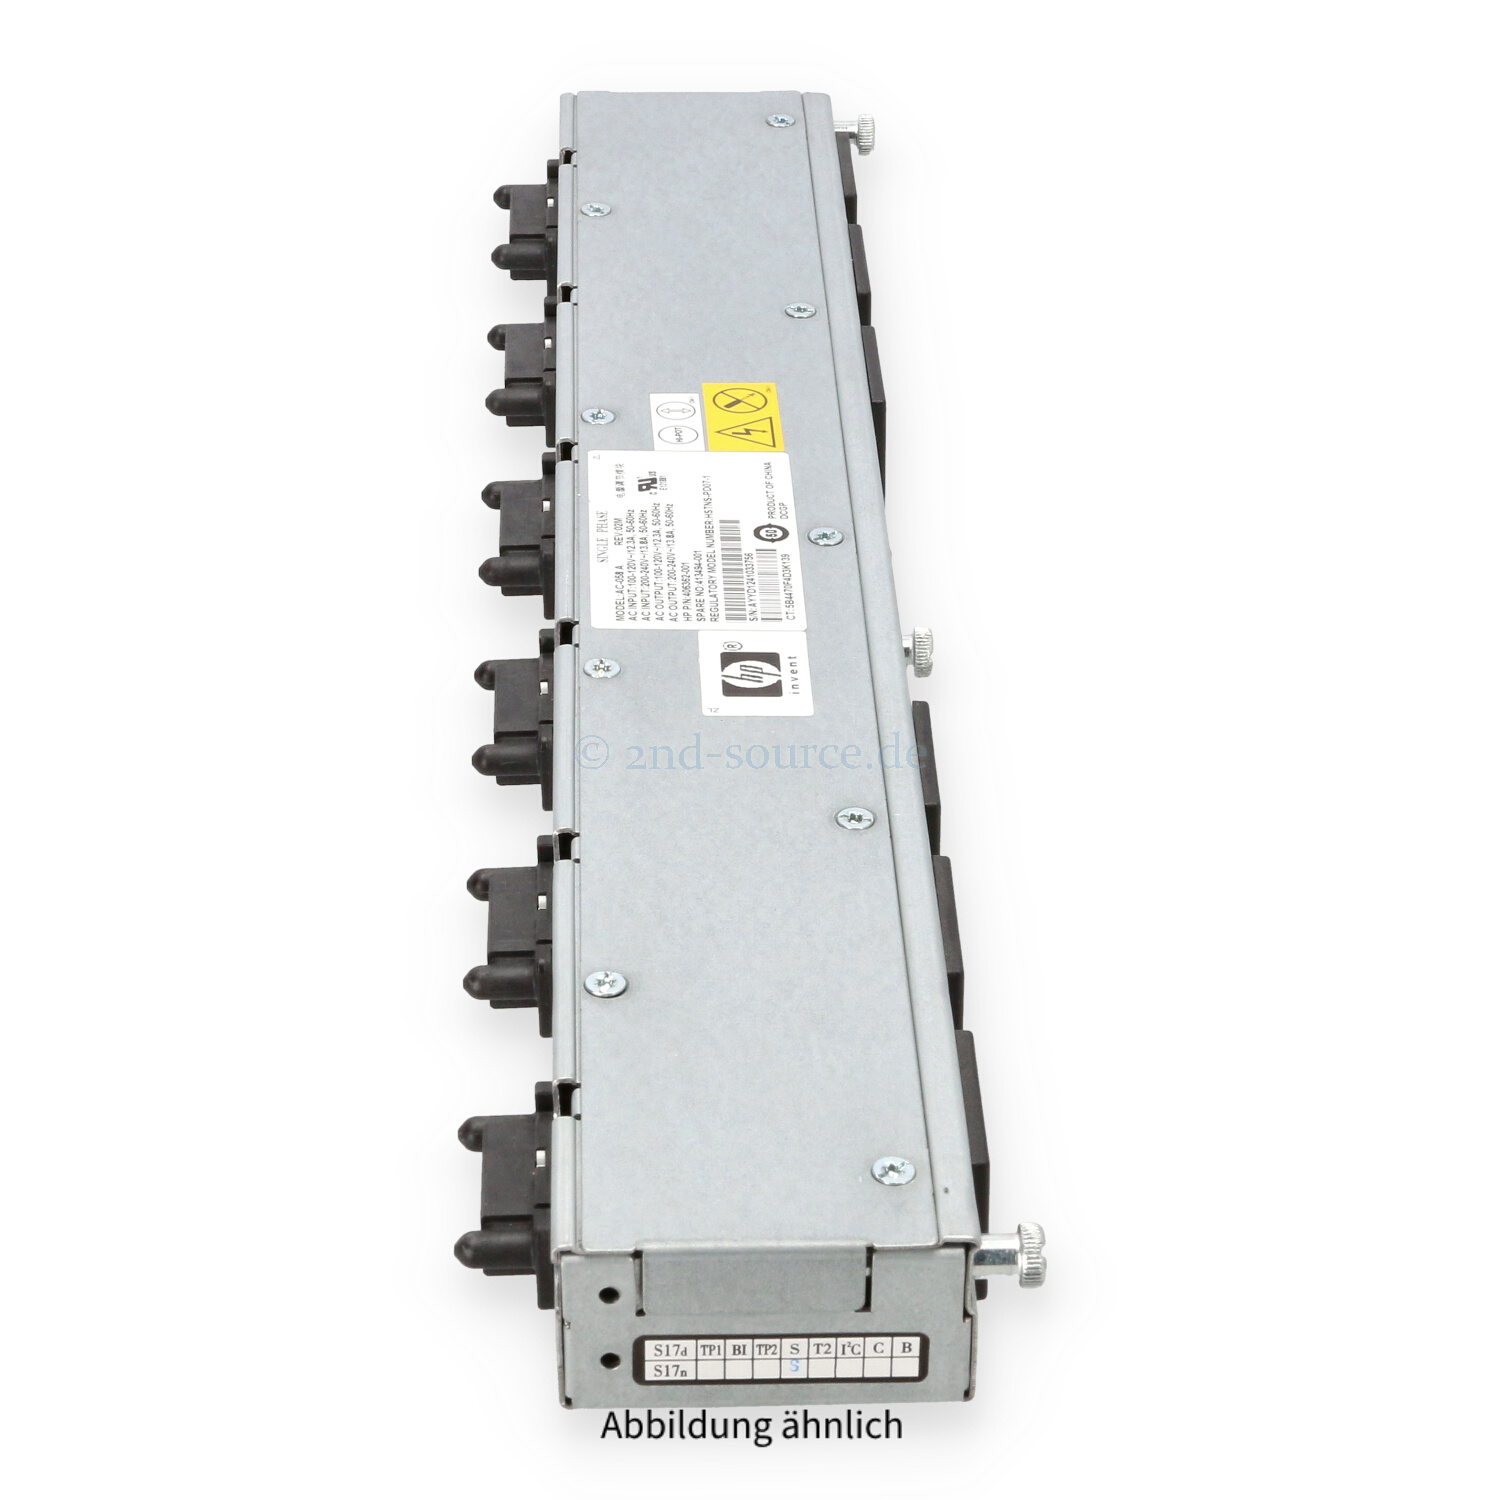 HPE Single Phase Power Module BladeSystem c7000 413379-B21 413494-001